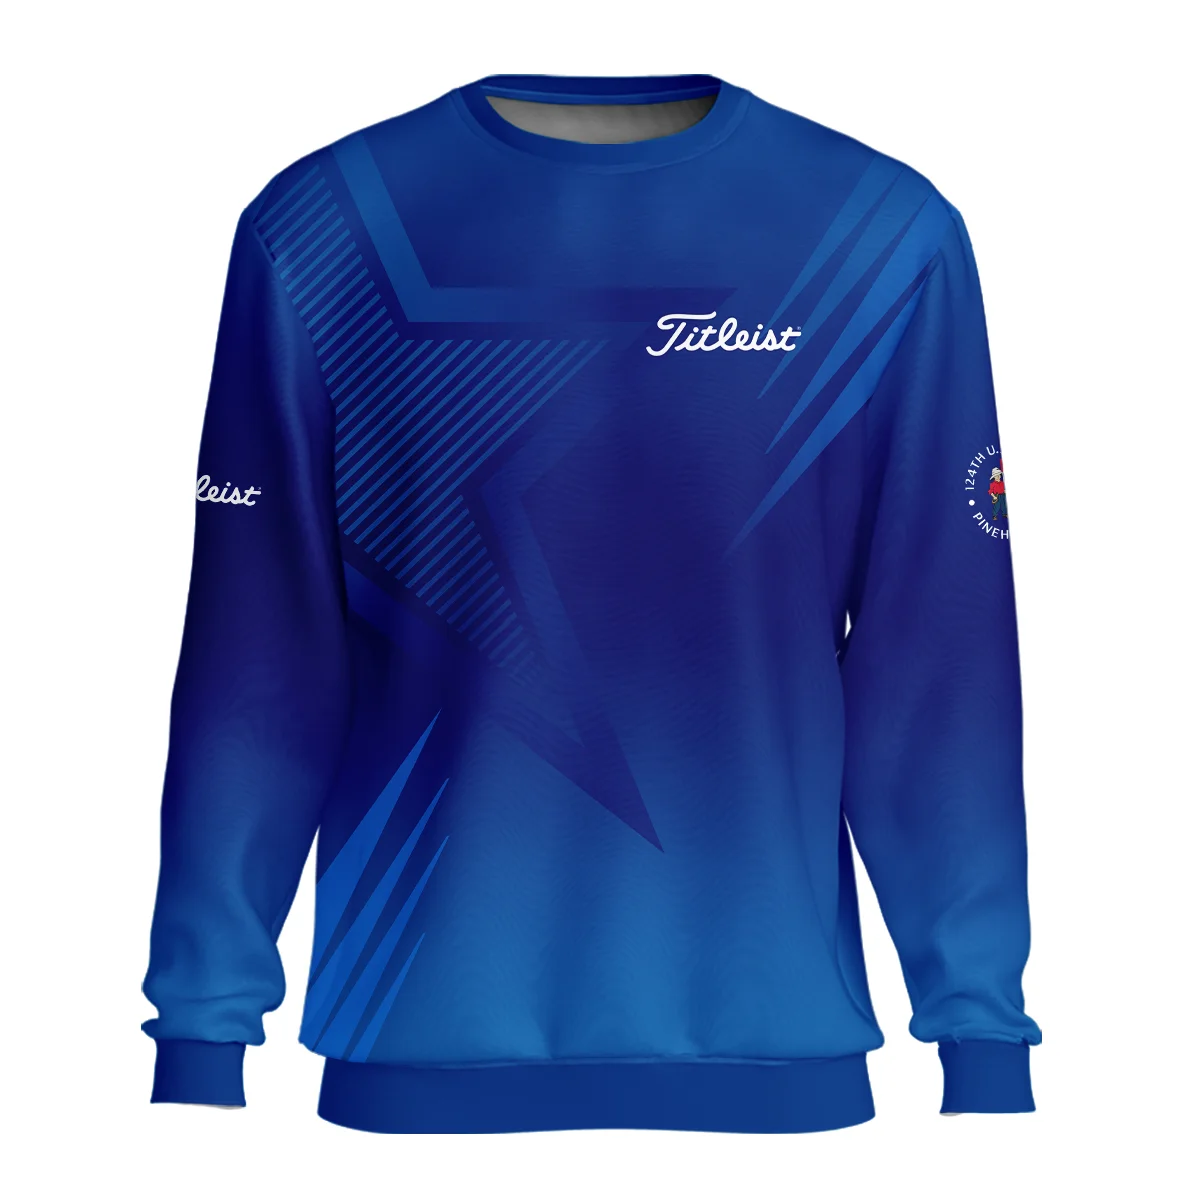 124th U.S. Open Pinehurst No.2 Titleist Polo Shirt Dark Blue Gradient Star Pattern Polo Shirt For Men